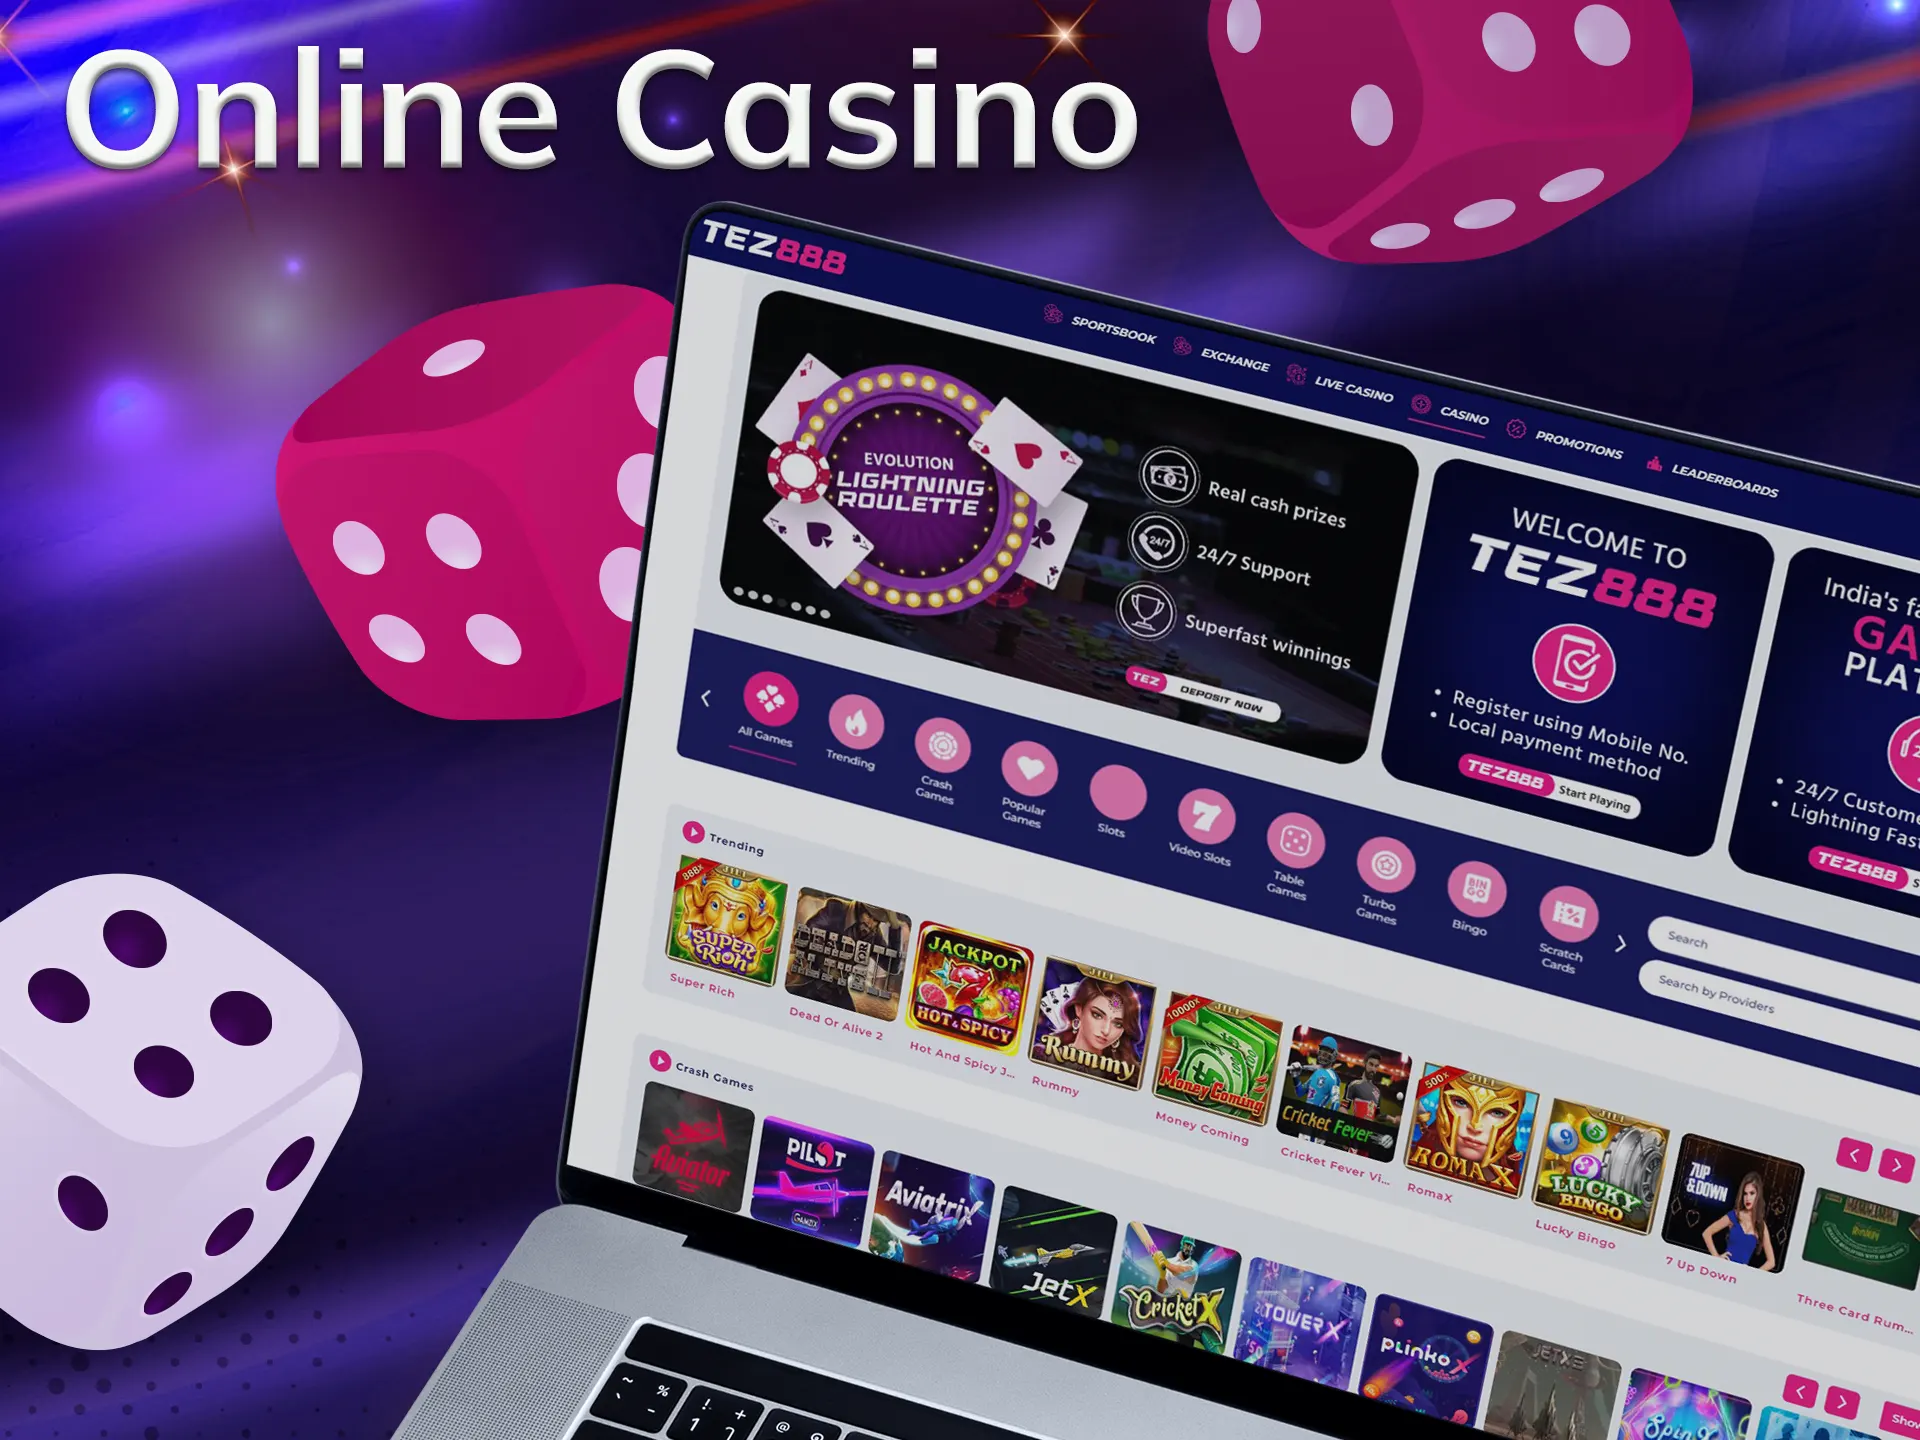 Play casino games at tez888.